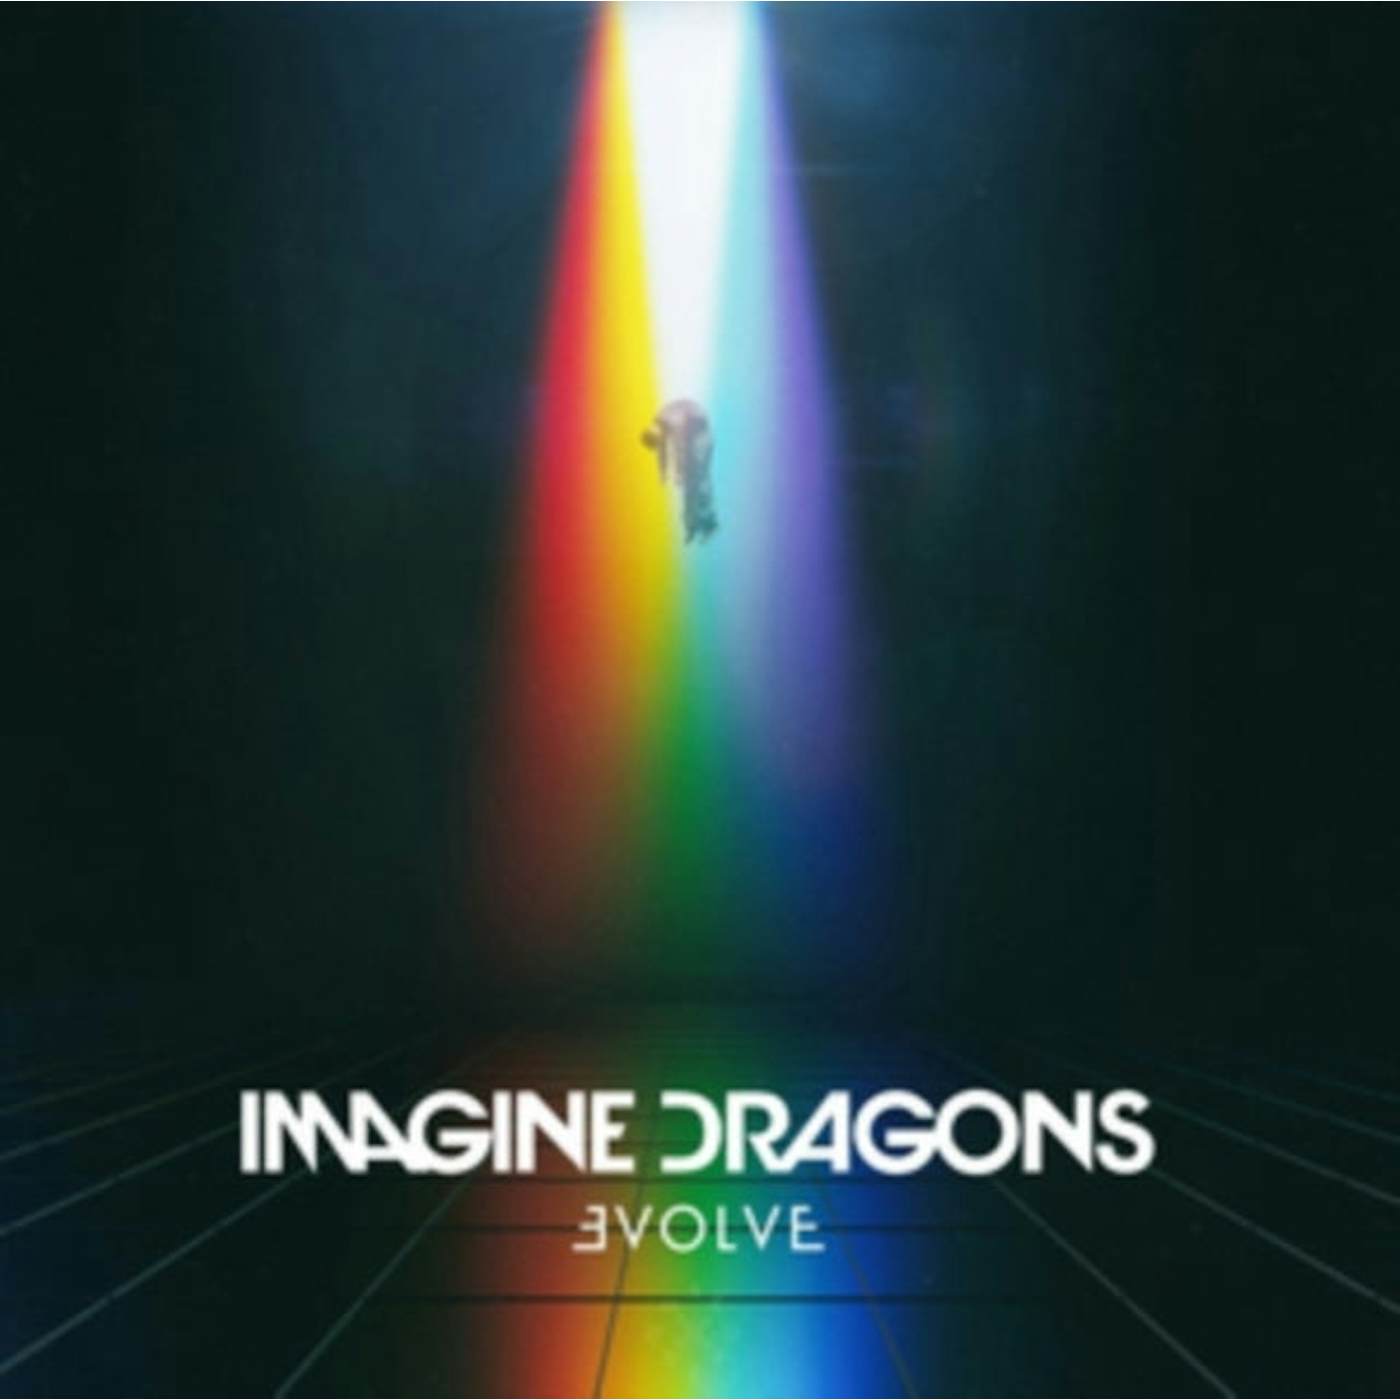 Imagine Dragons LP Vinyl Record - Evolve